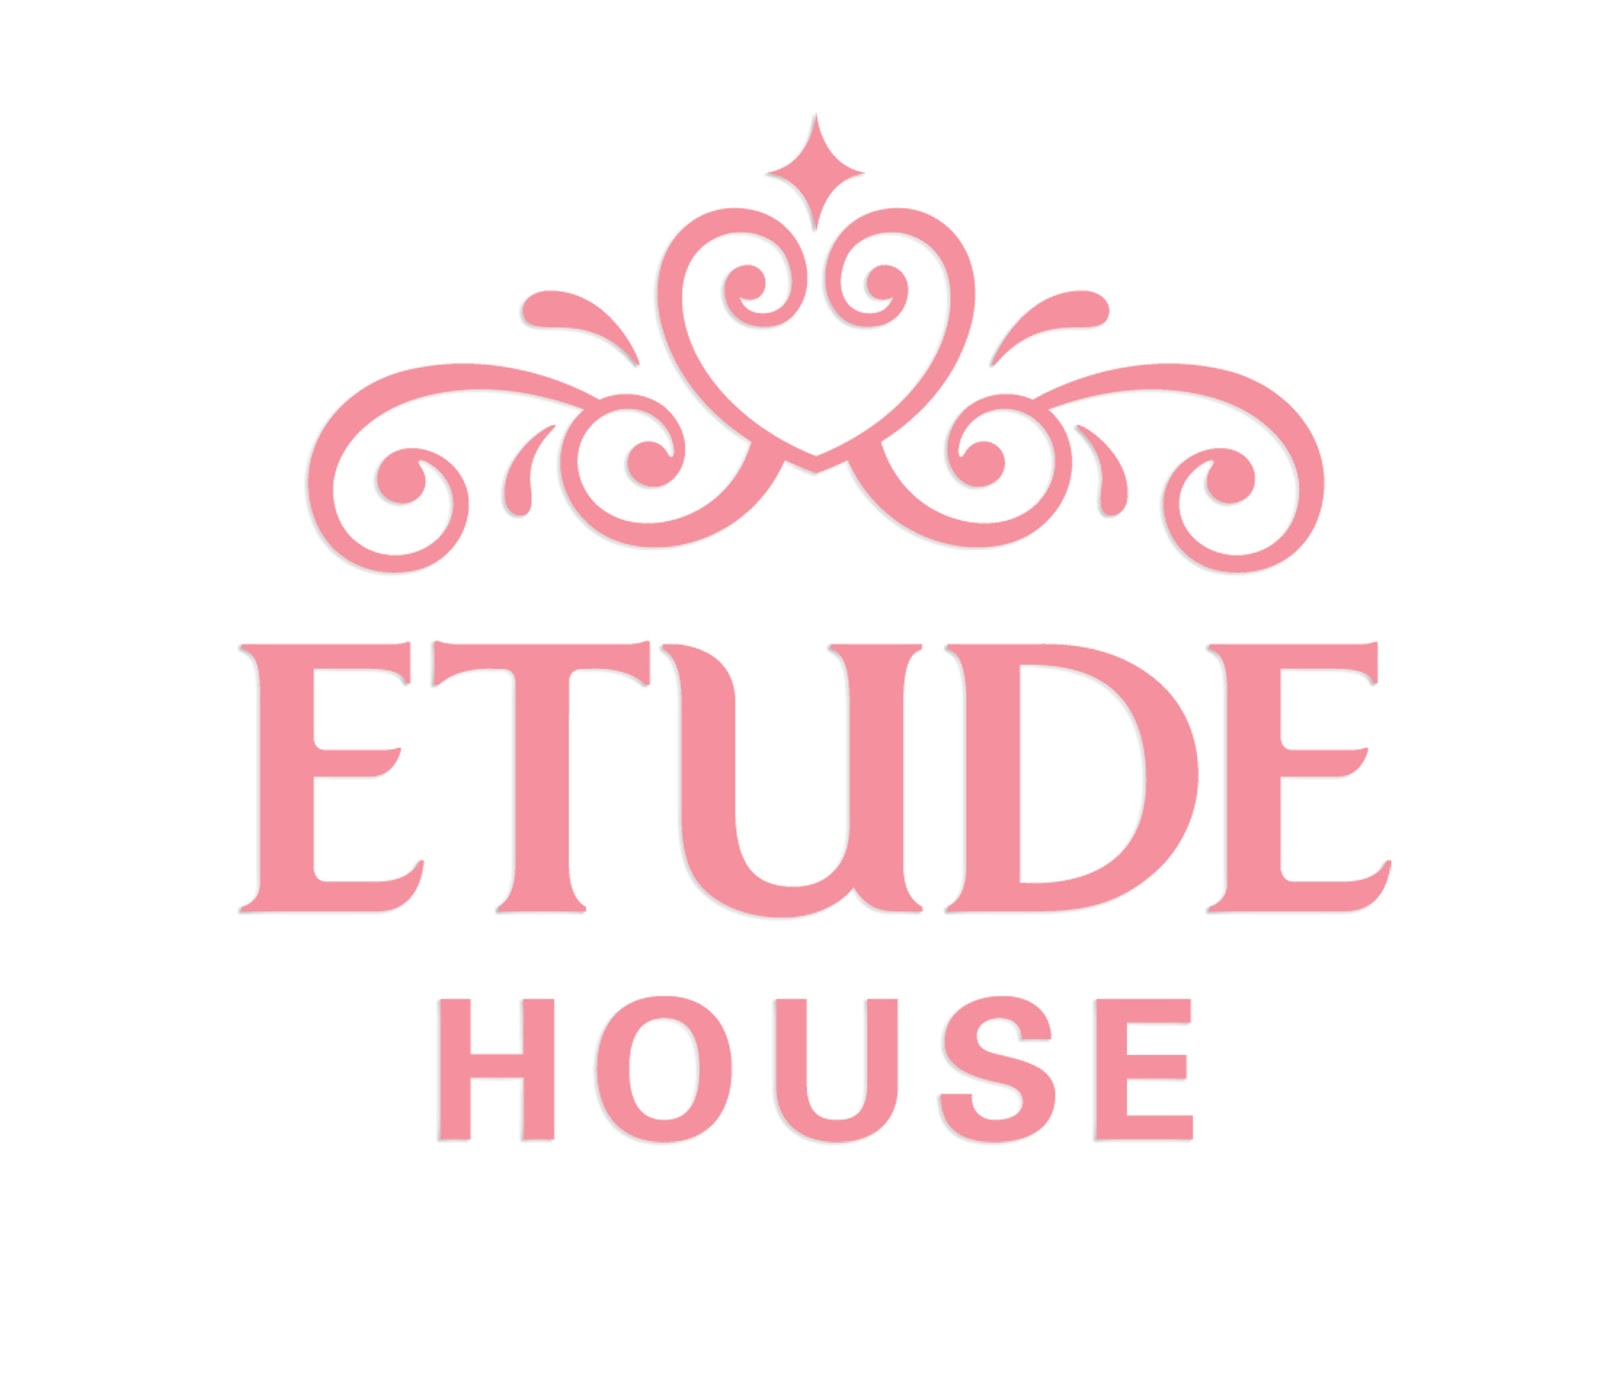 Косметика бренда ETUDE HOUSE, логотип